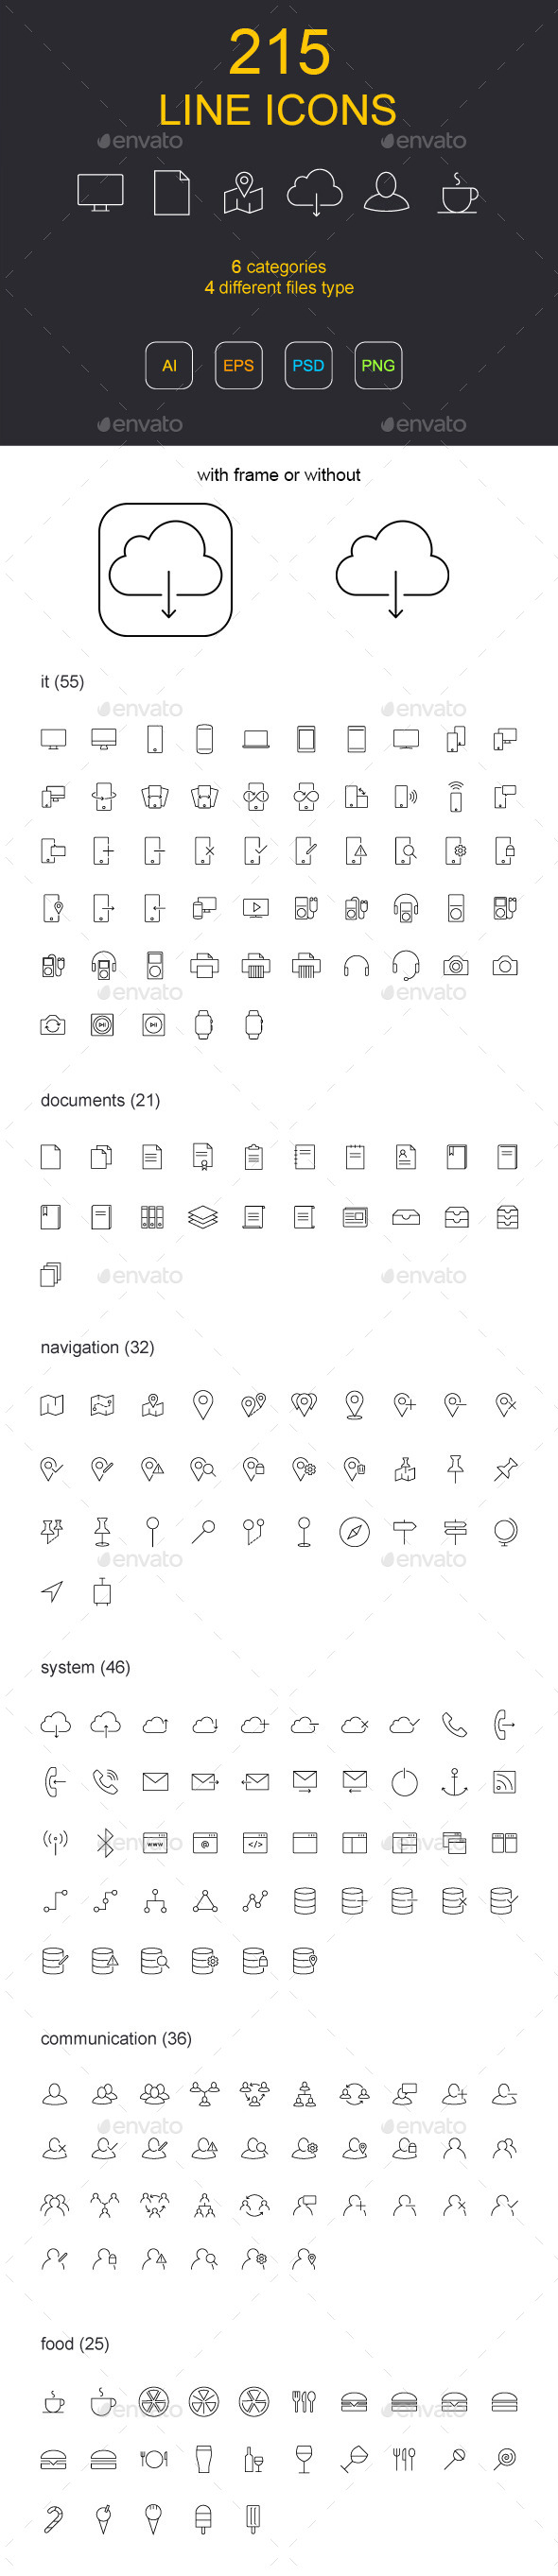 线框图标素材包 215 Line Icons（PSD, EPS, AI, JPG&PNG）插图